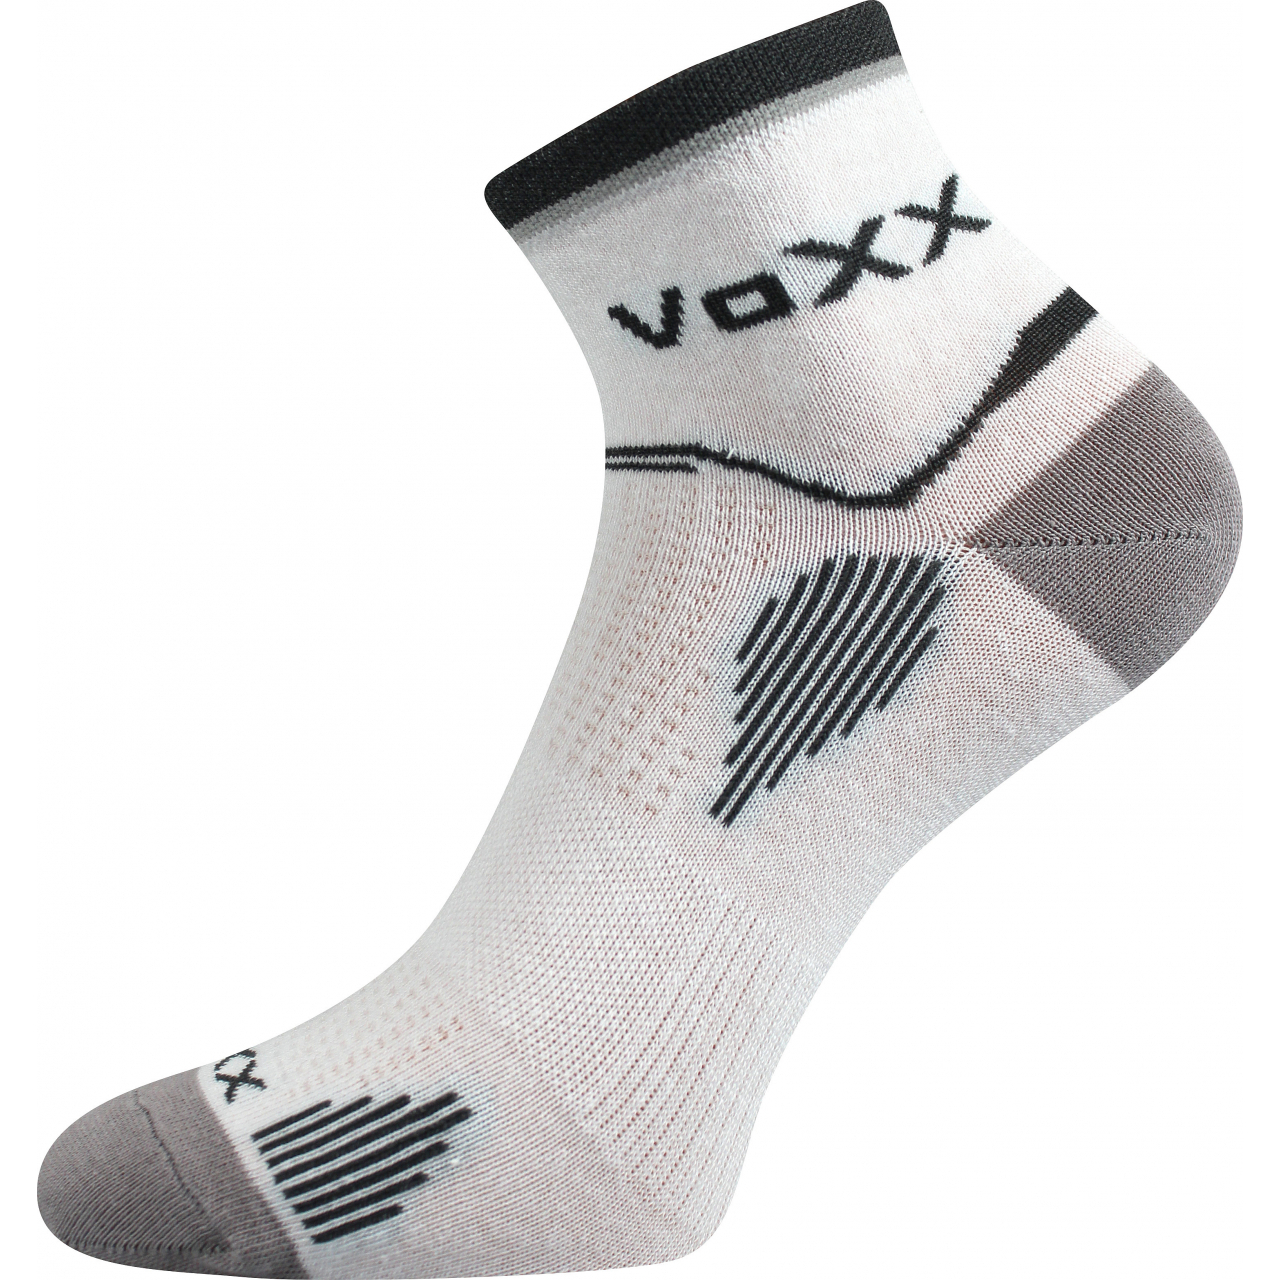 Ponožky unisex sportovní Voxx Sirius - bílé-šedé, 39-42